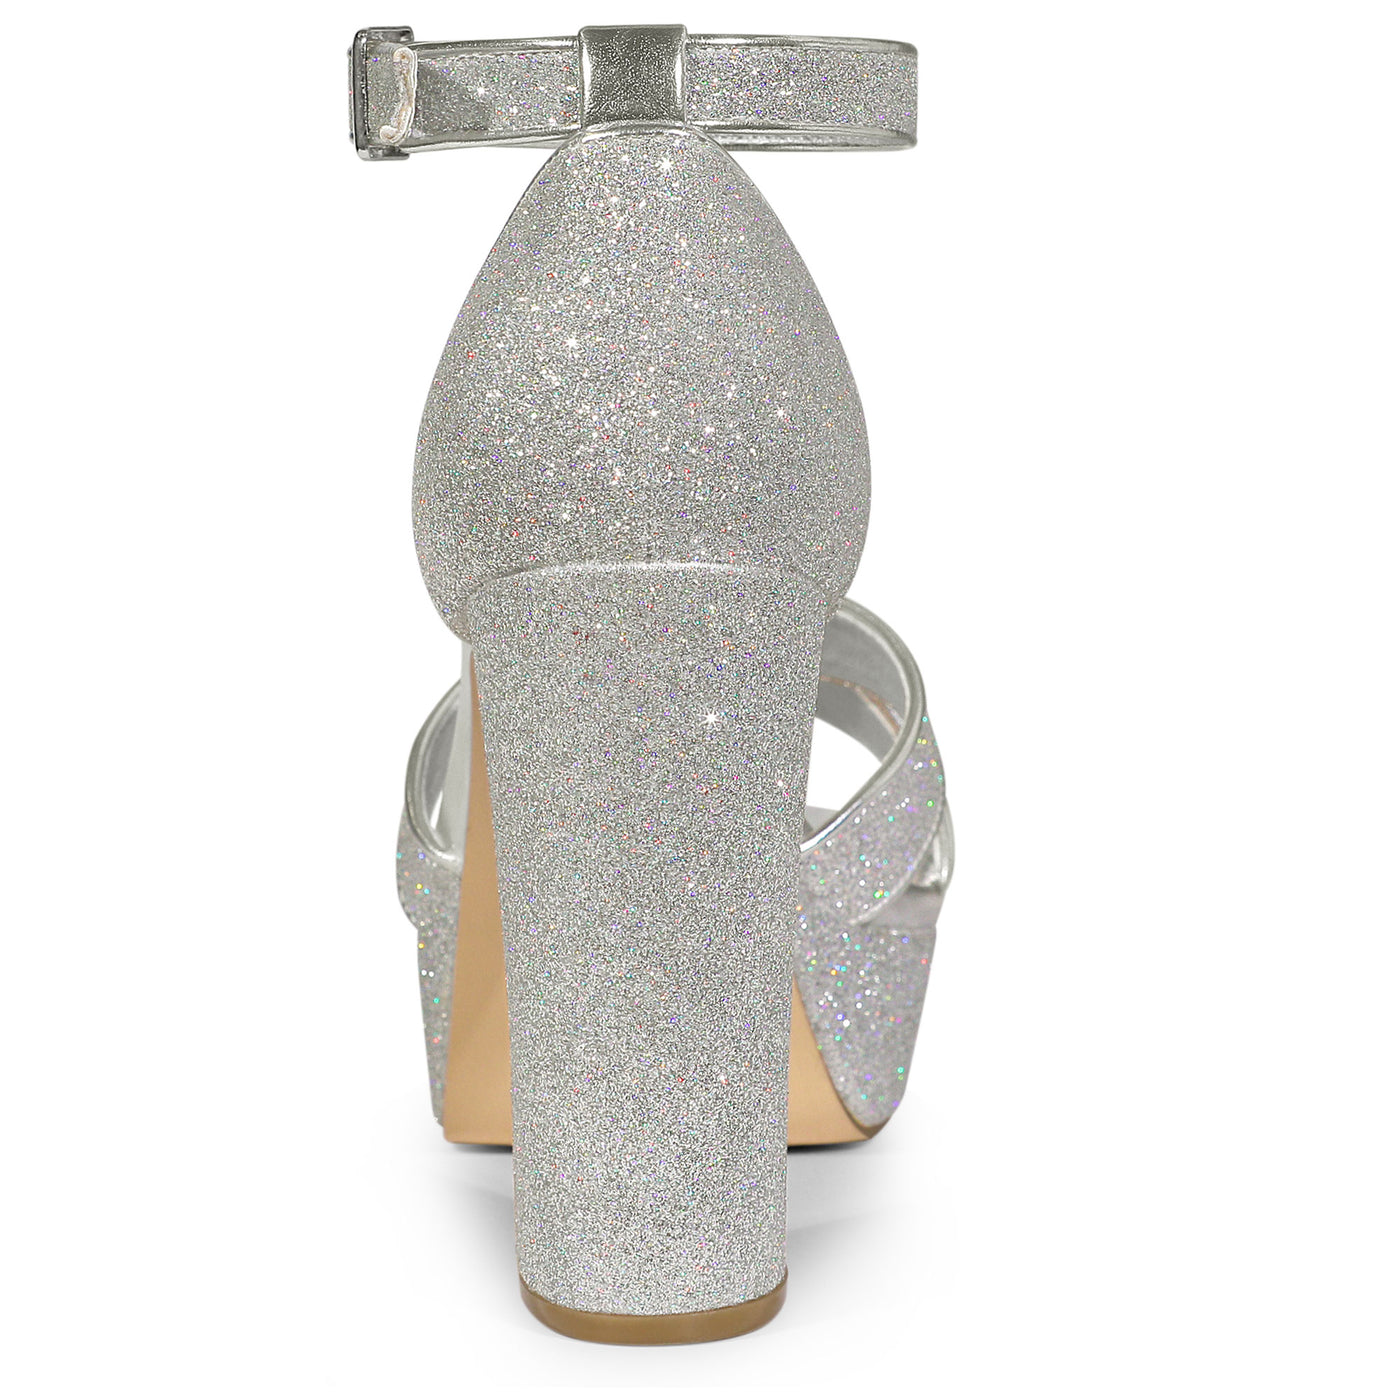 Bublédon Perphy Glitter Platform Crisscross Strap Chunky Heel Sandal